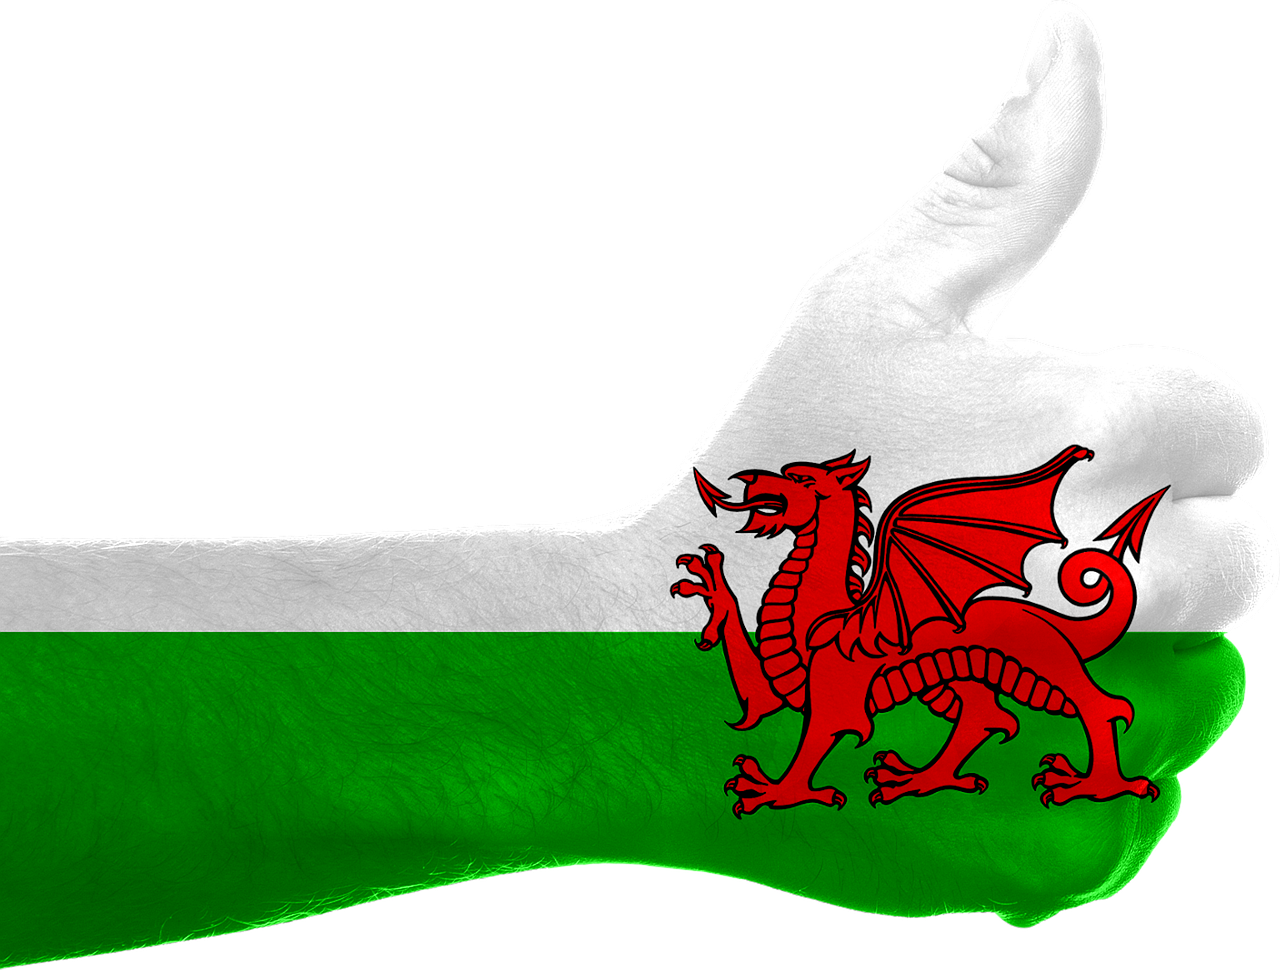 Wales,england,dragon,kingdom,queen - free image from needpix.com